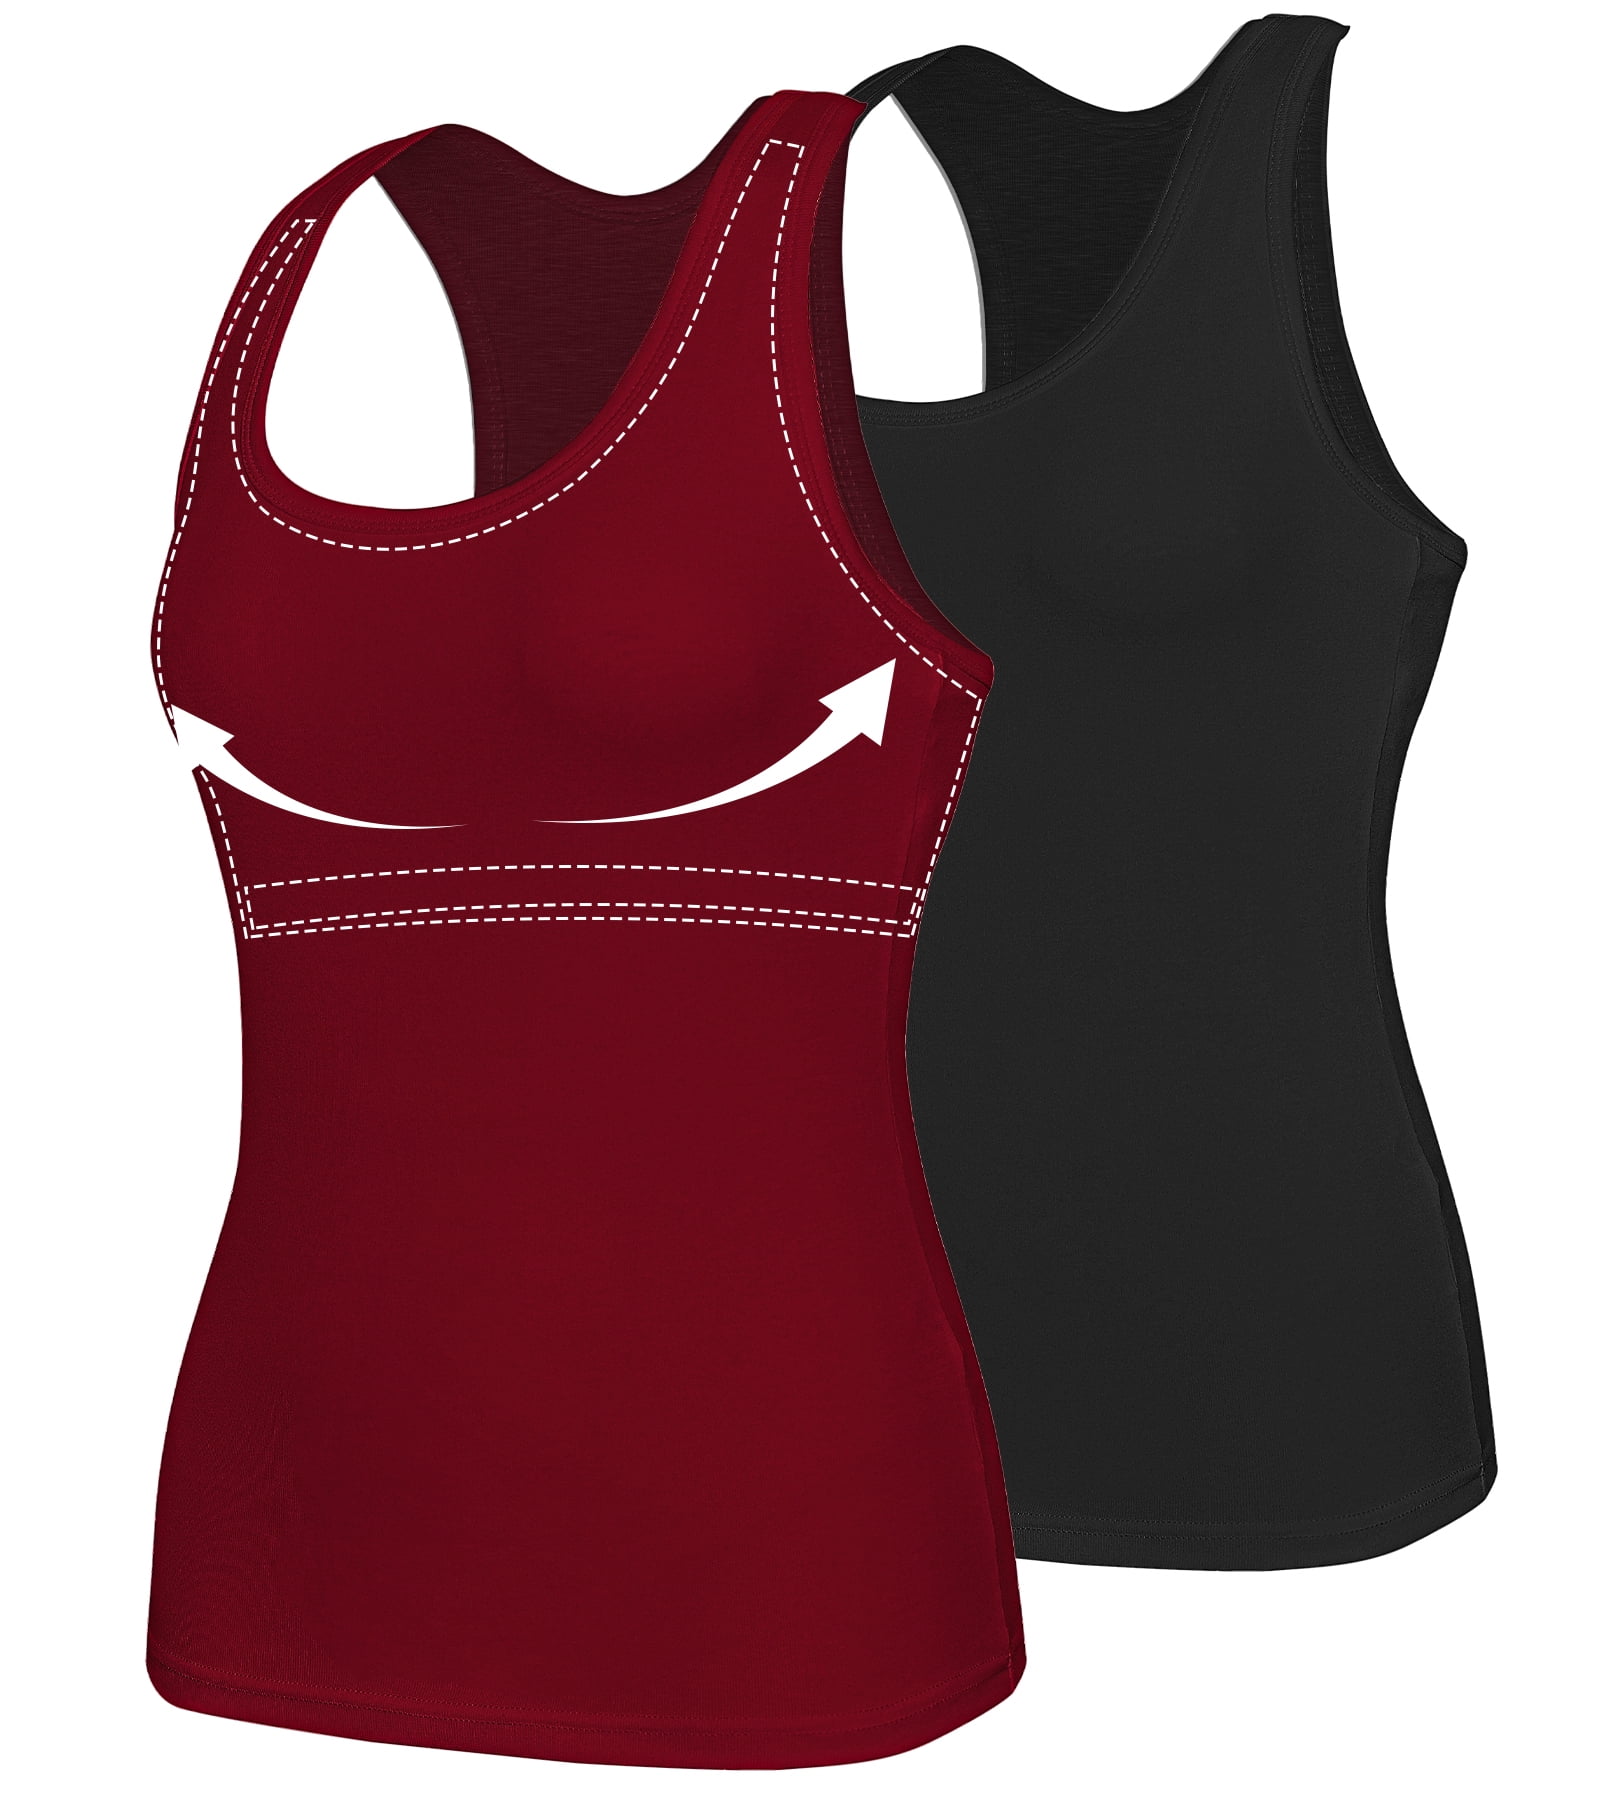 Anyfit Wear Racerback Workout Tank Tops With Shelf Bra for Women Basic  Athletic Tanks Yoga Undershirt Summer Sleeveless Exercise Tops Black S 